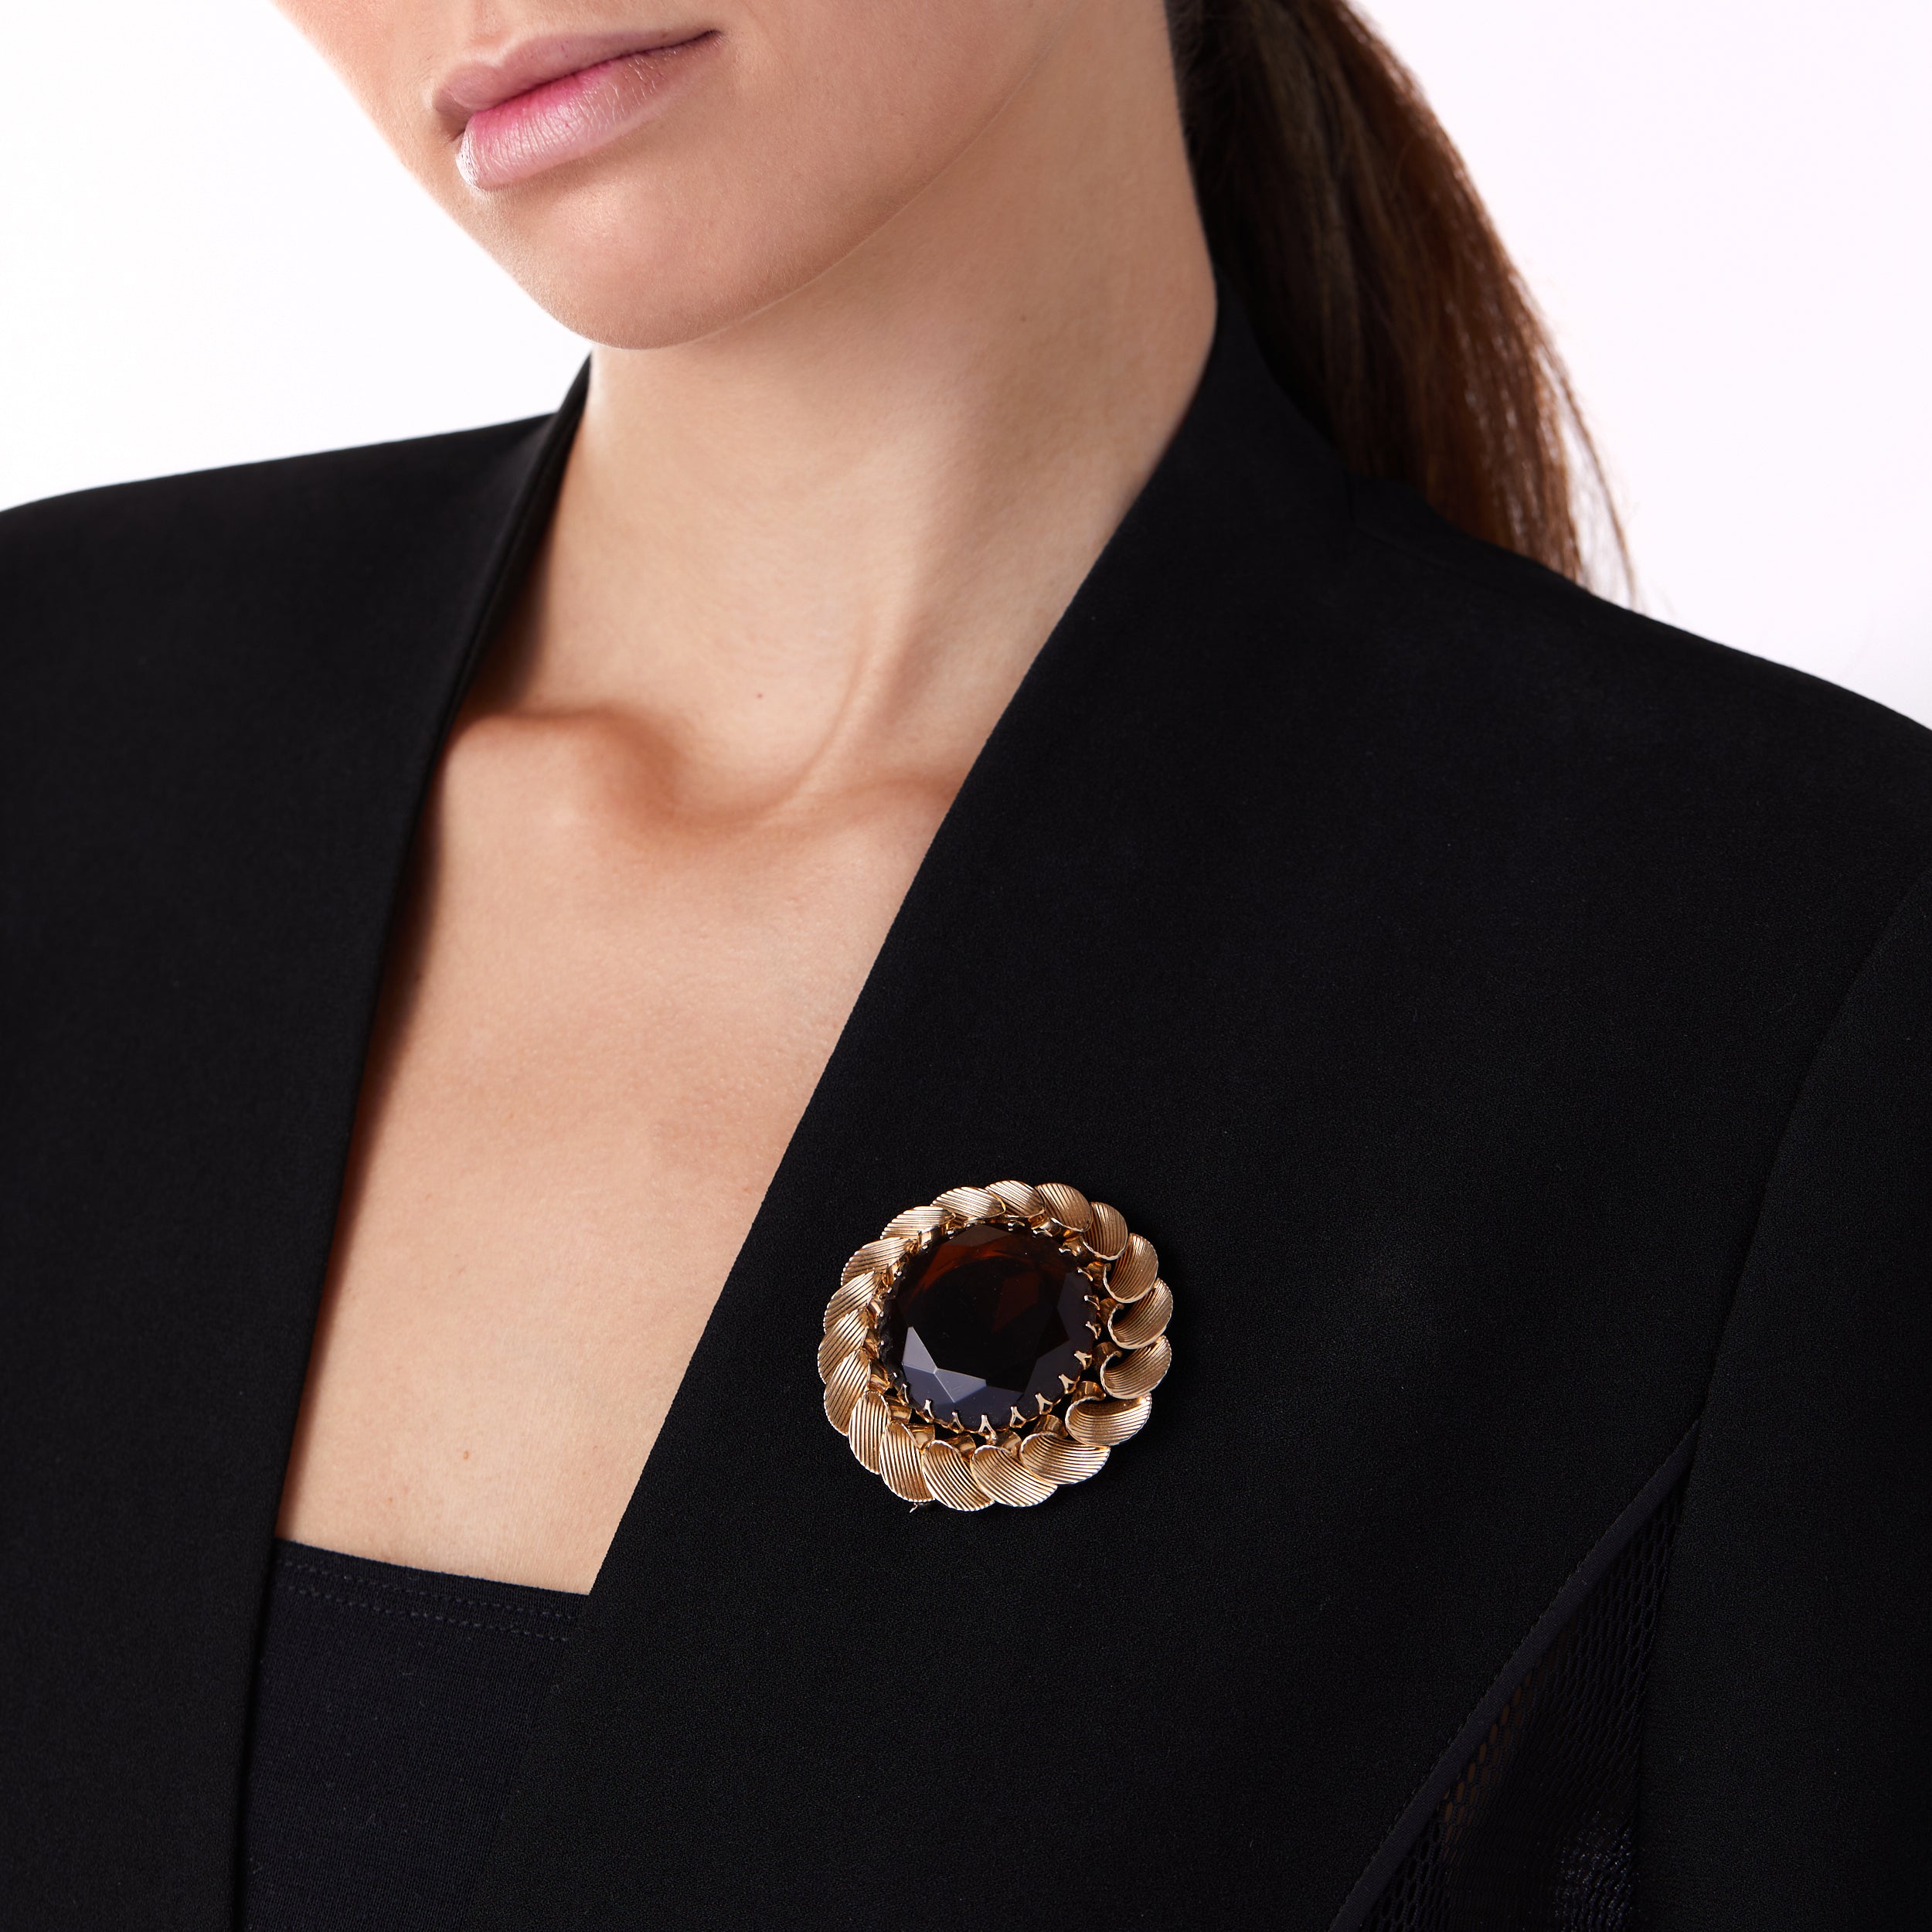 Vintage Marvella wreath pin brooch worn on a blazer lapel